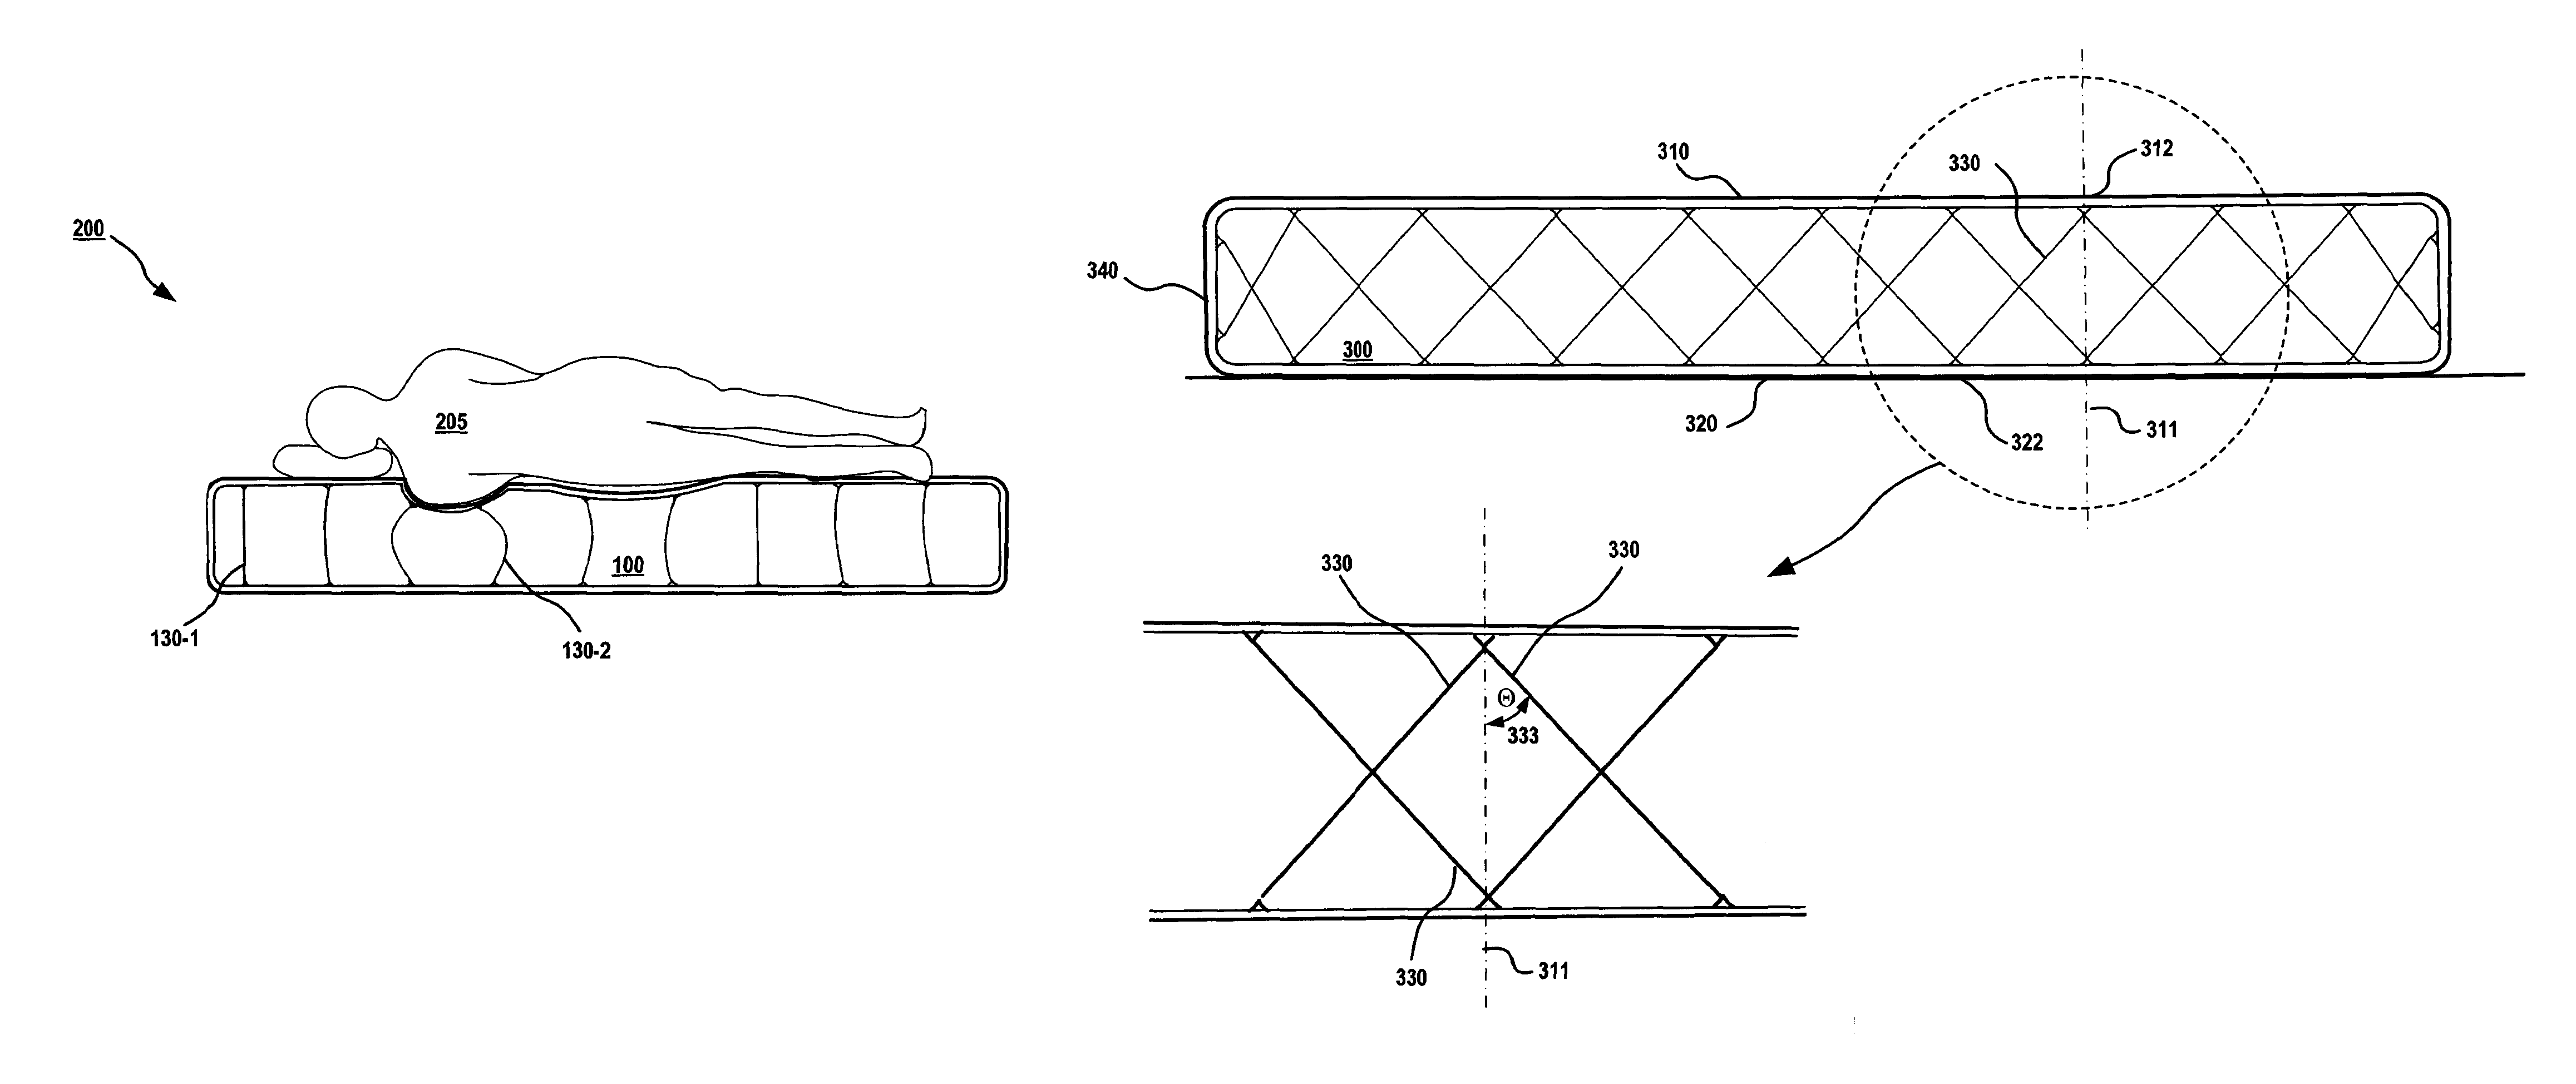 Air mattresses having internal diagonal support structures